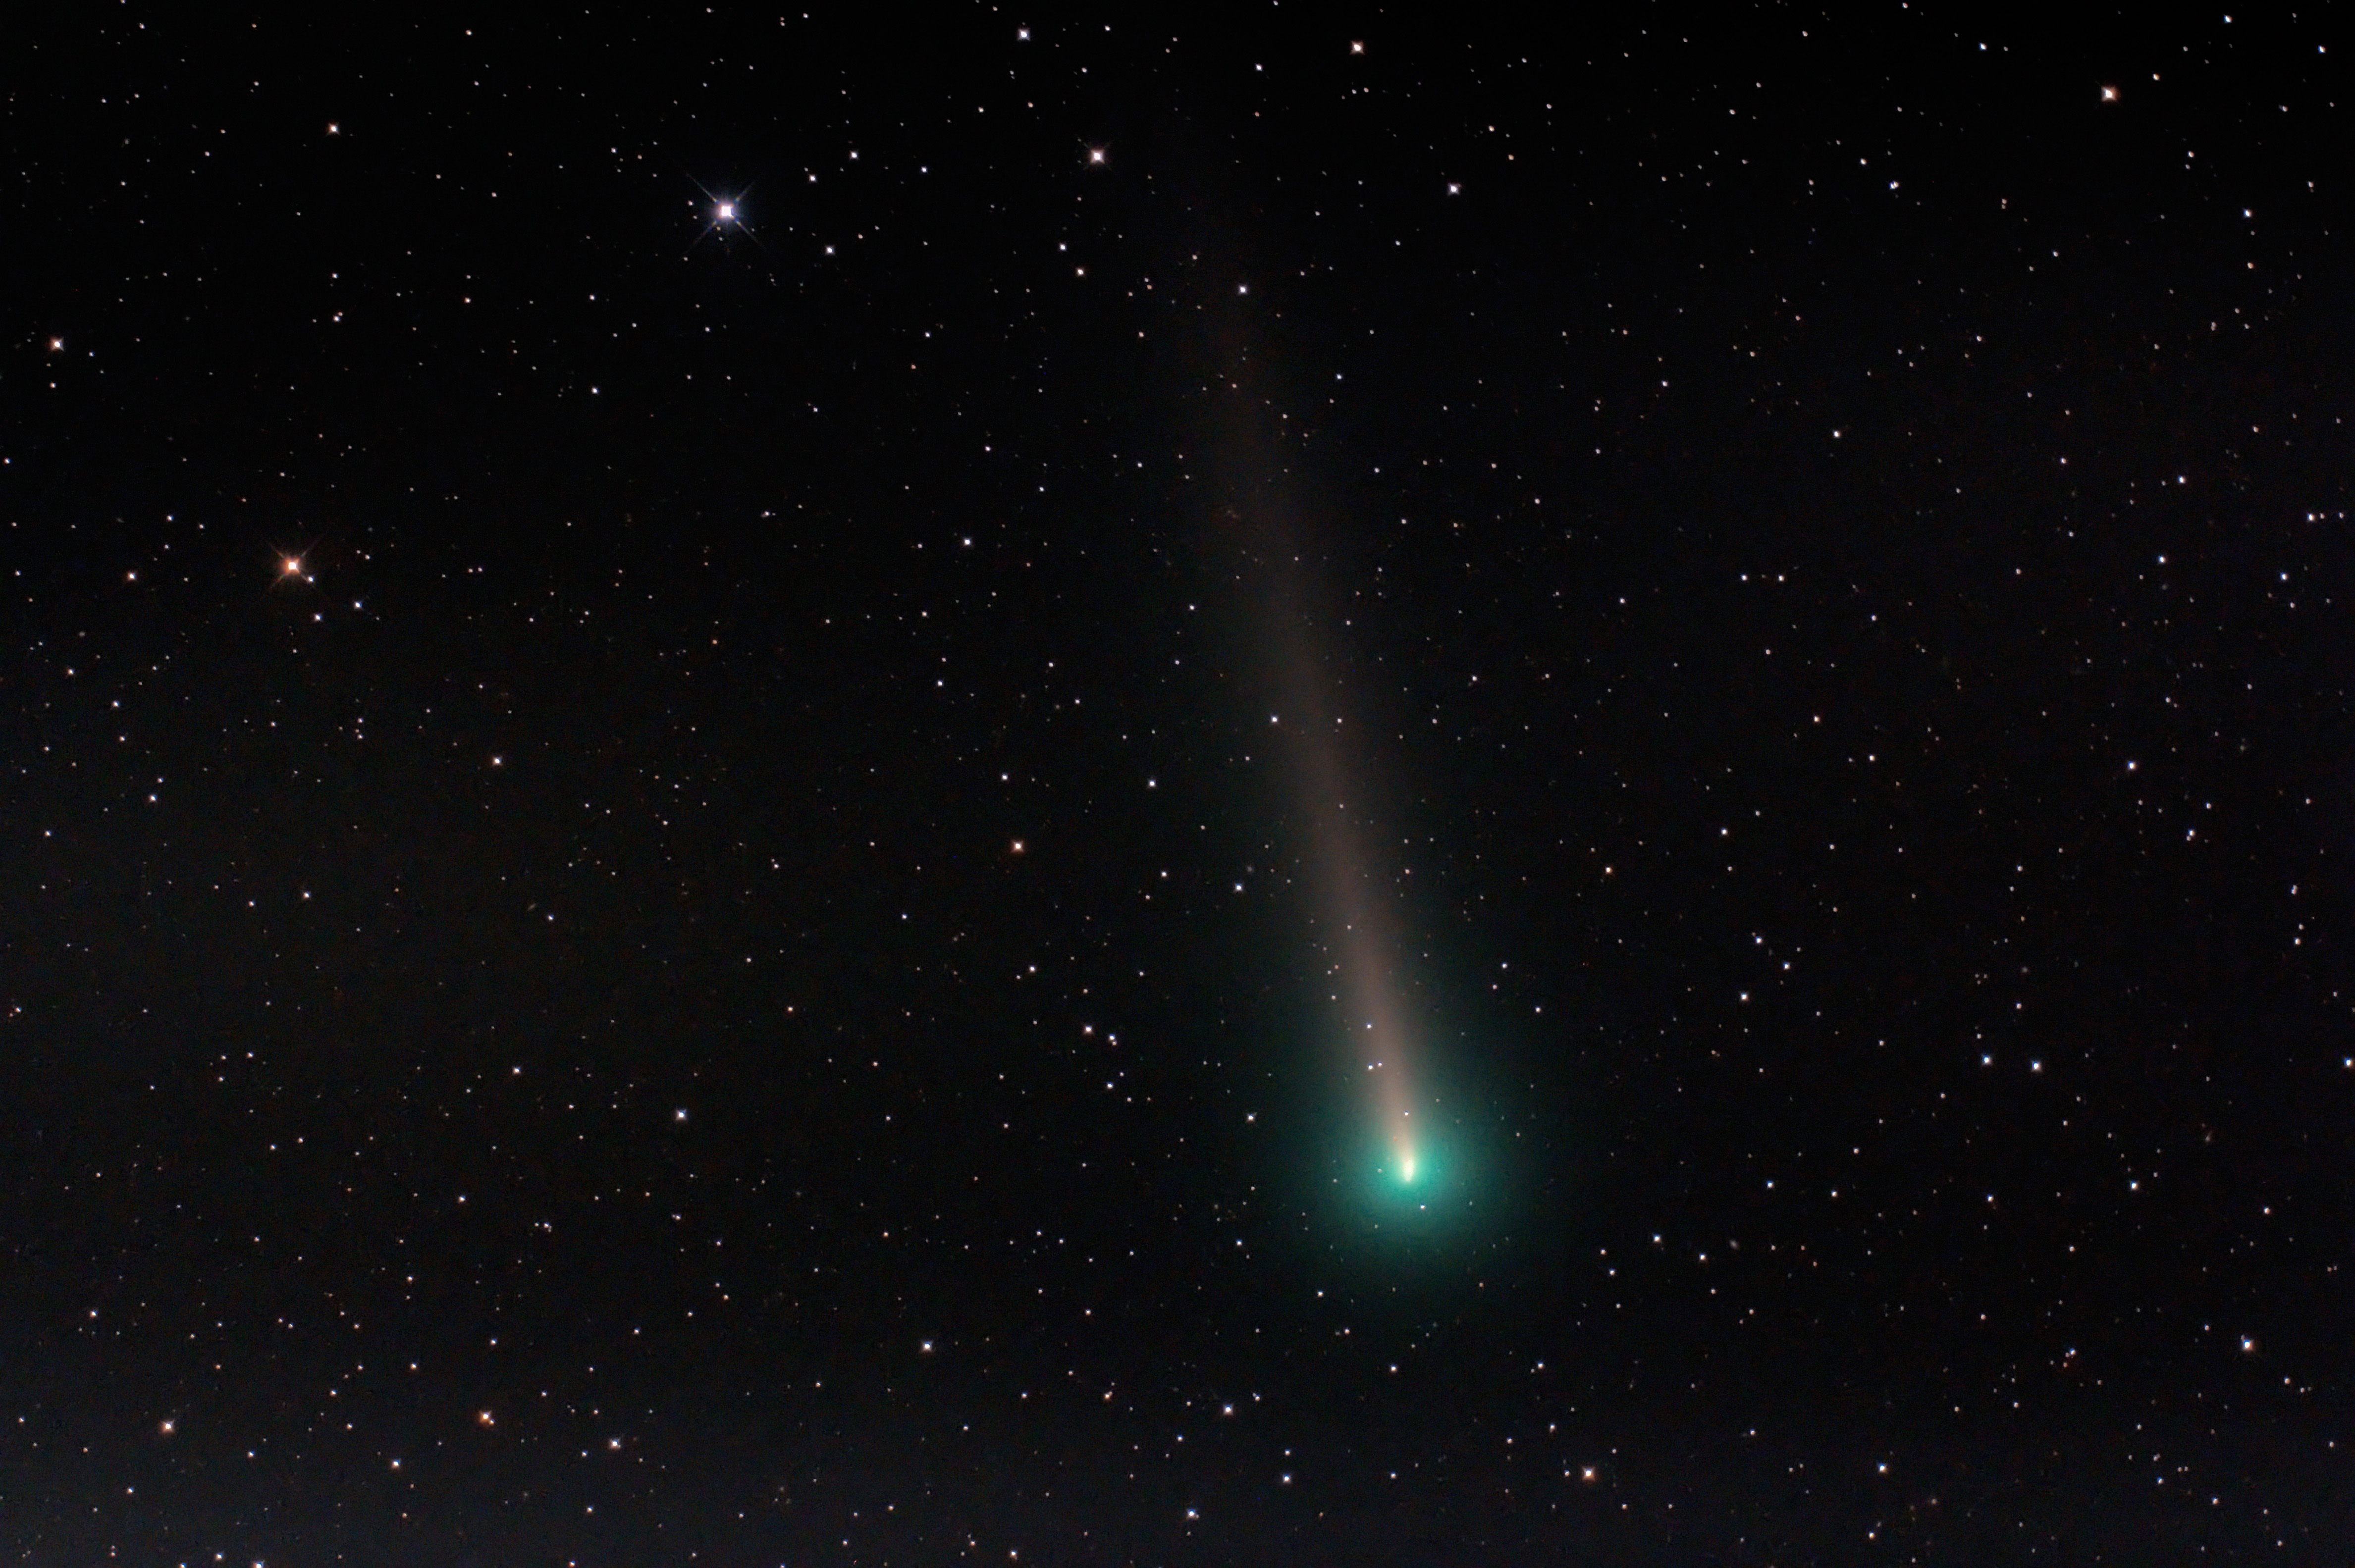 Comet_C2021A1 Leonard_211204_E160_60D_IP2-005c_filtered.jpg